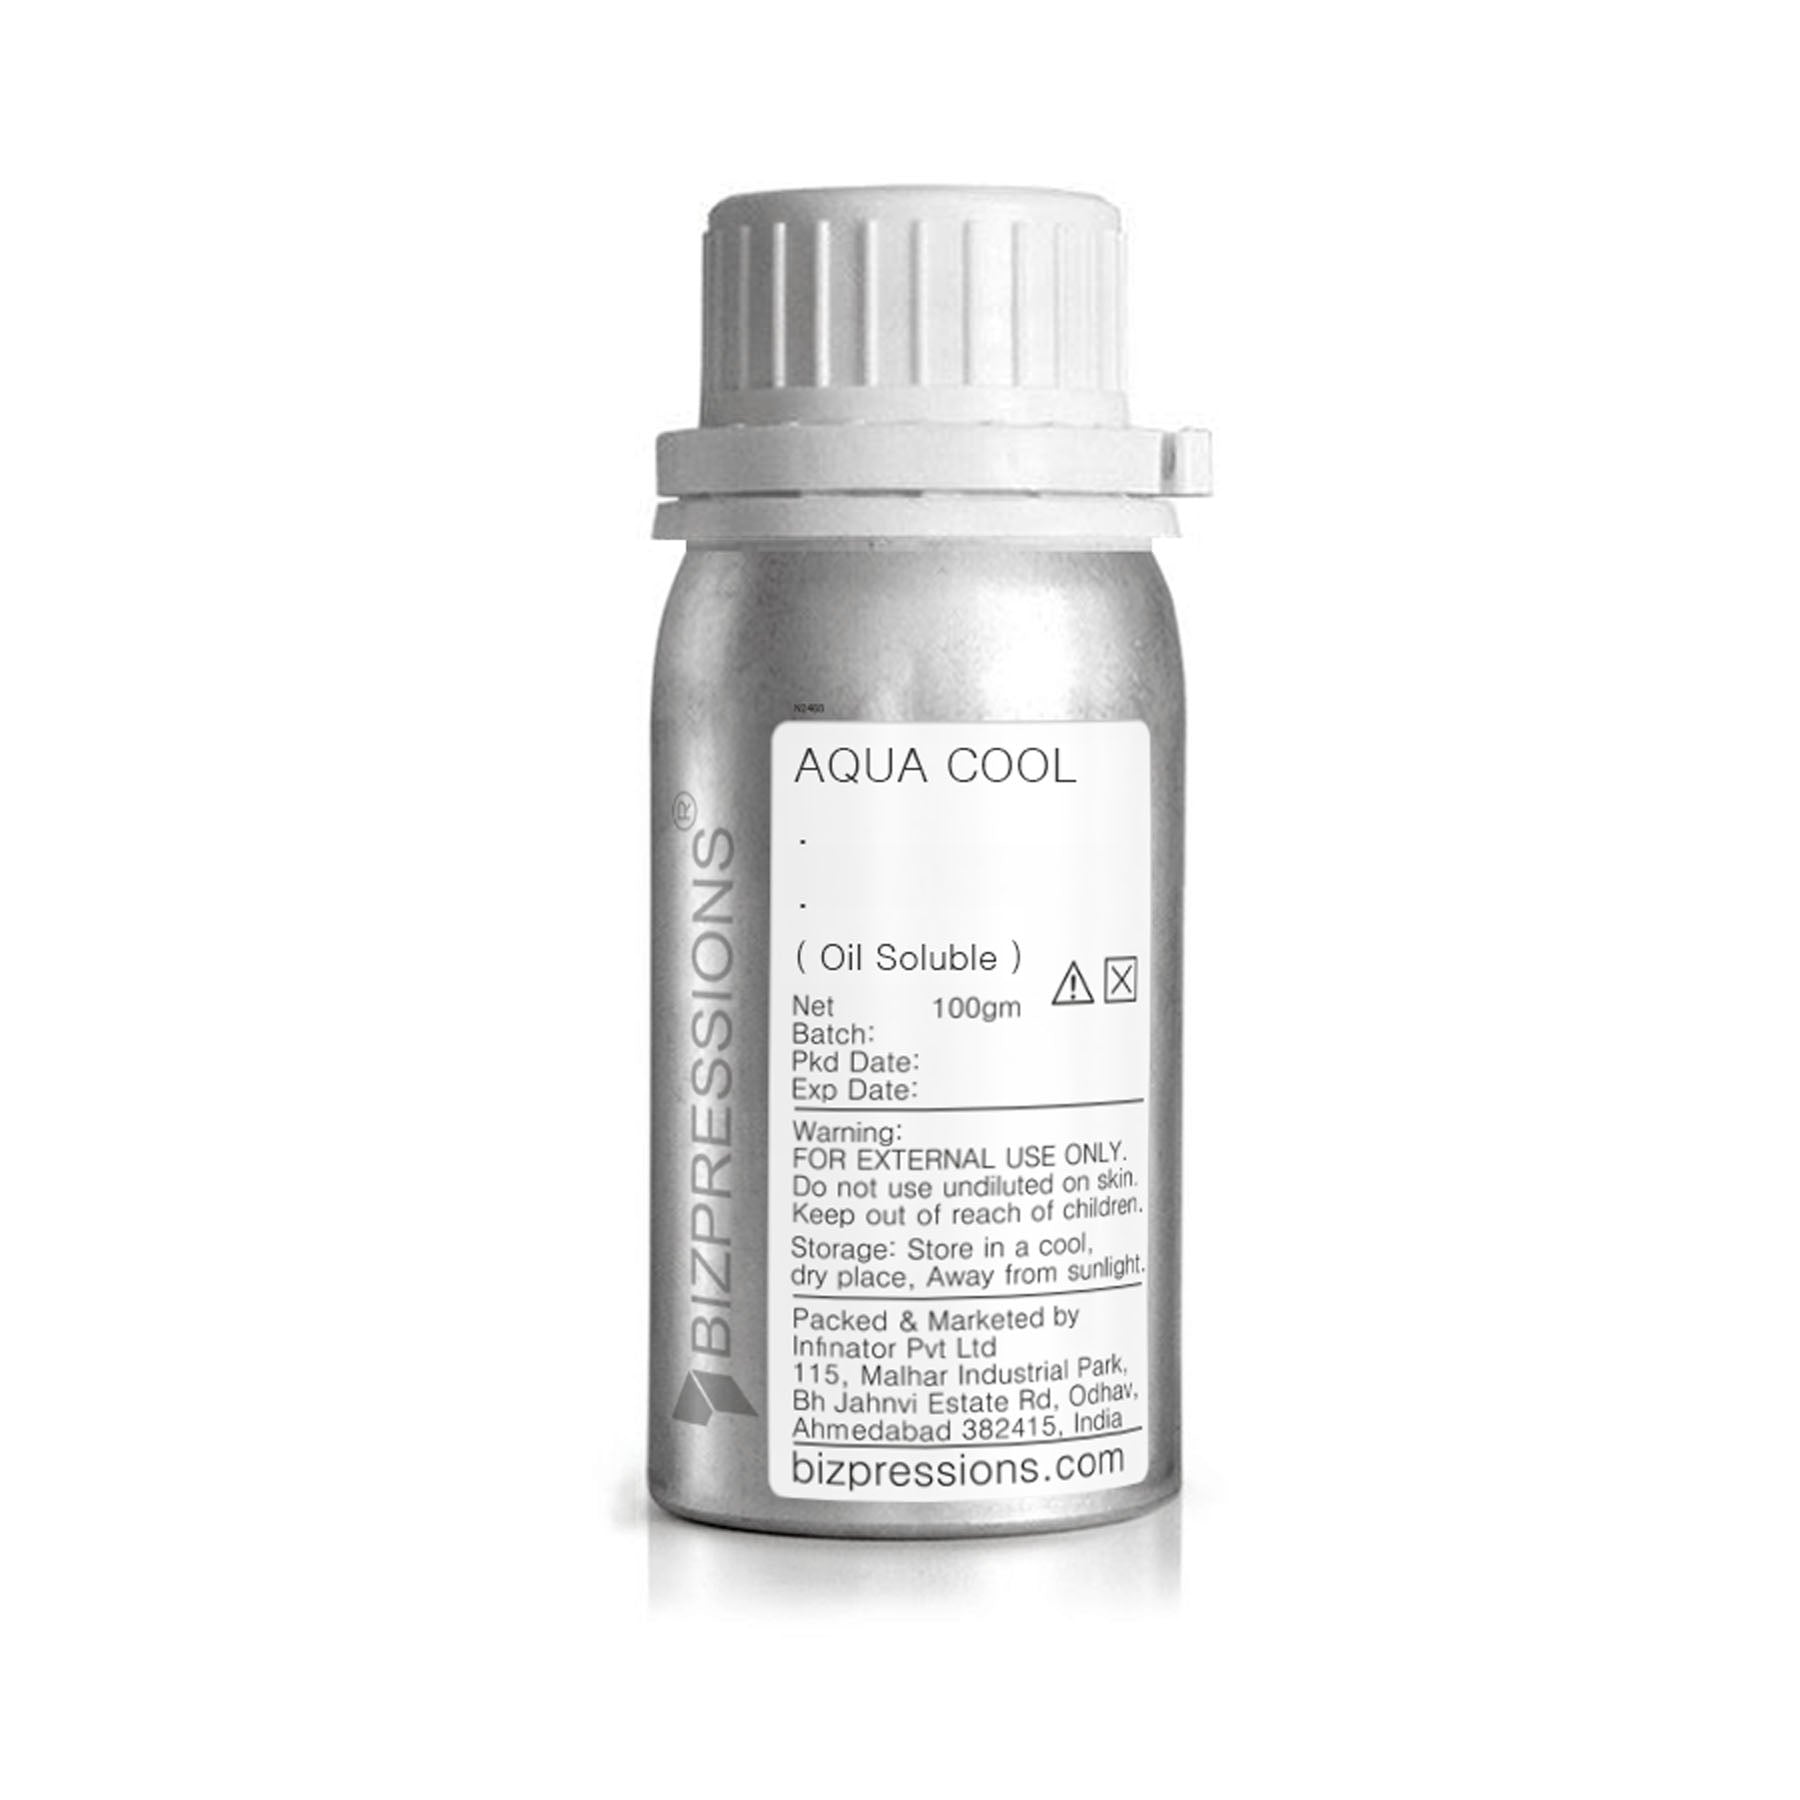 AQUA COOL - Fragrance ( Oil Soluble ) - 100 gm